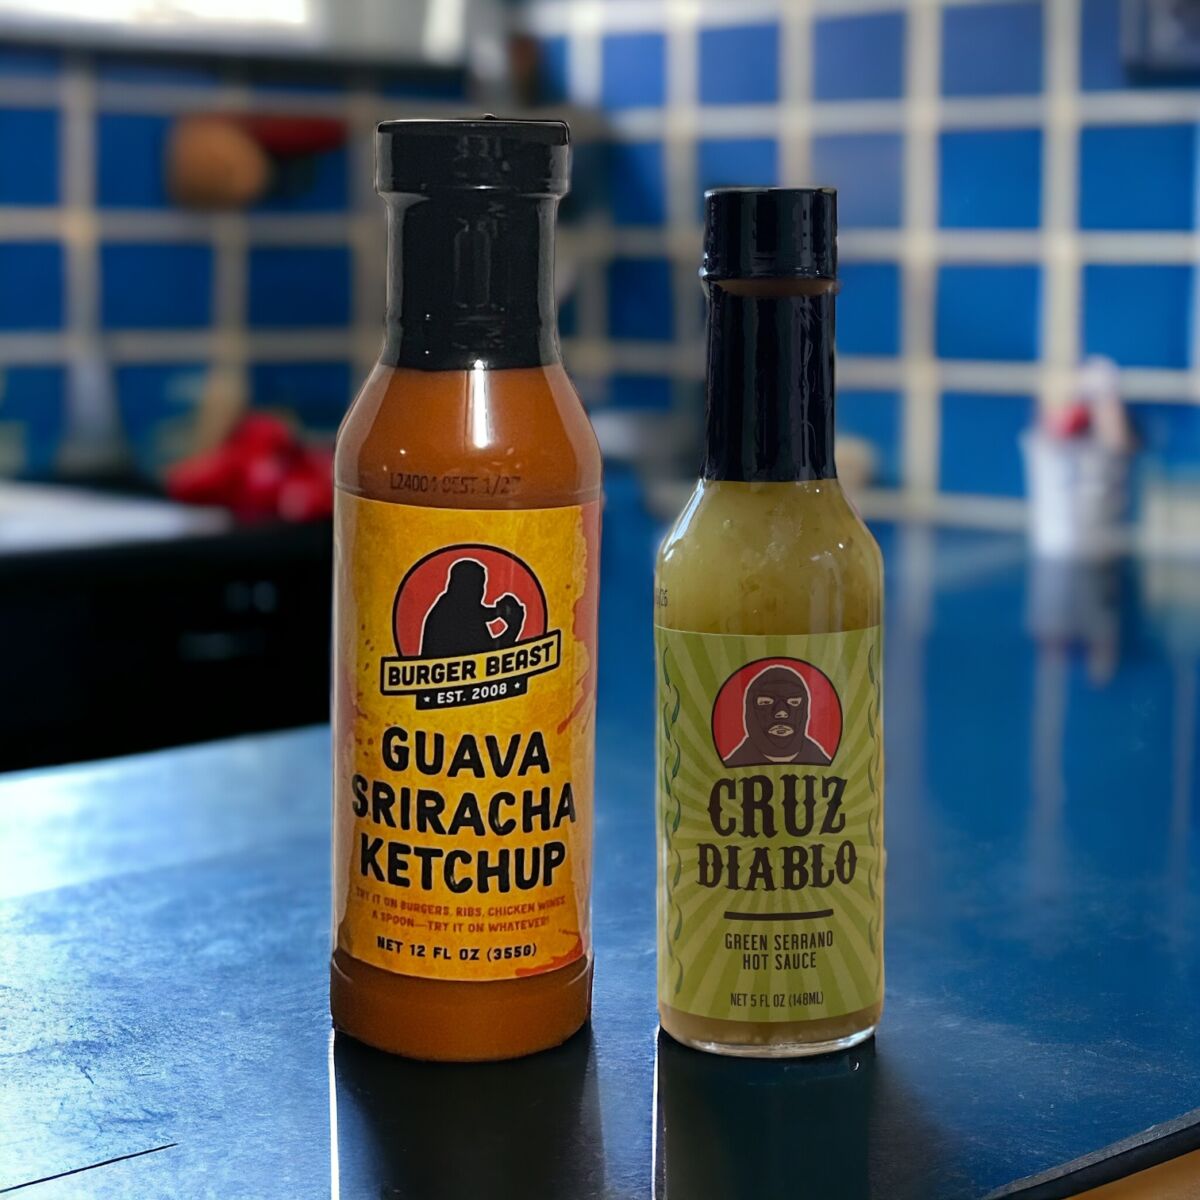 Burger Beast Guava Sriracha Ketchup & Cruz Diablo Green Serrano Hot Sauce